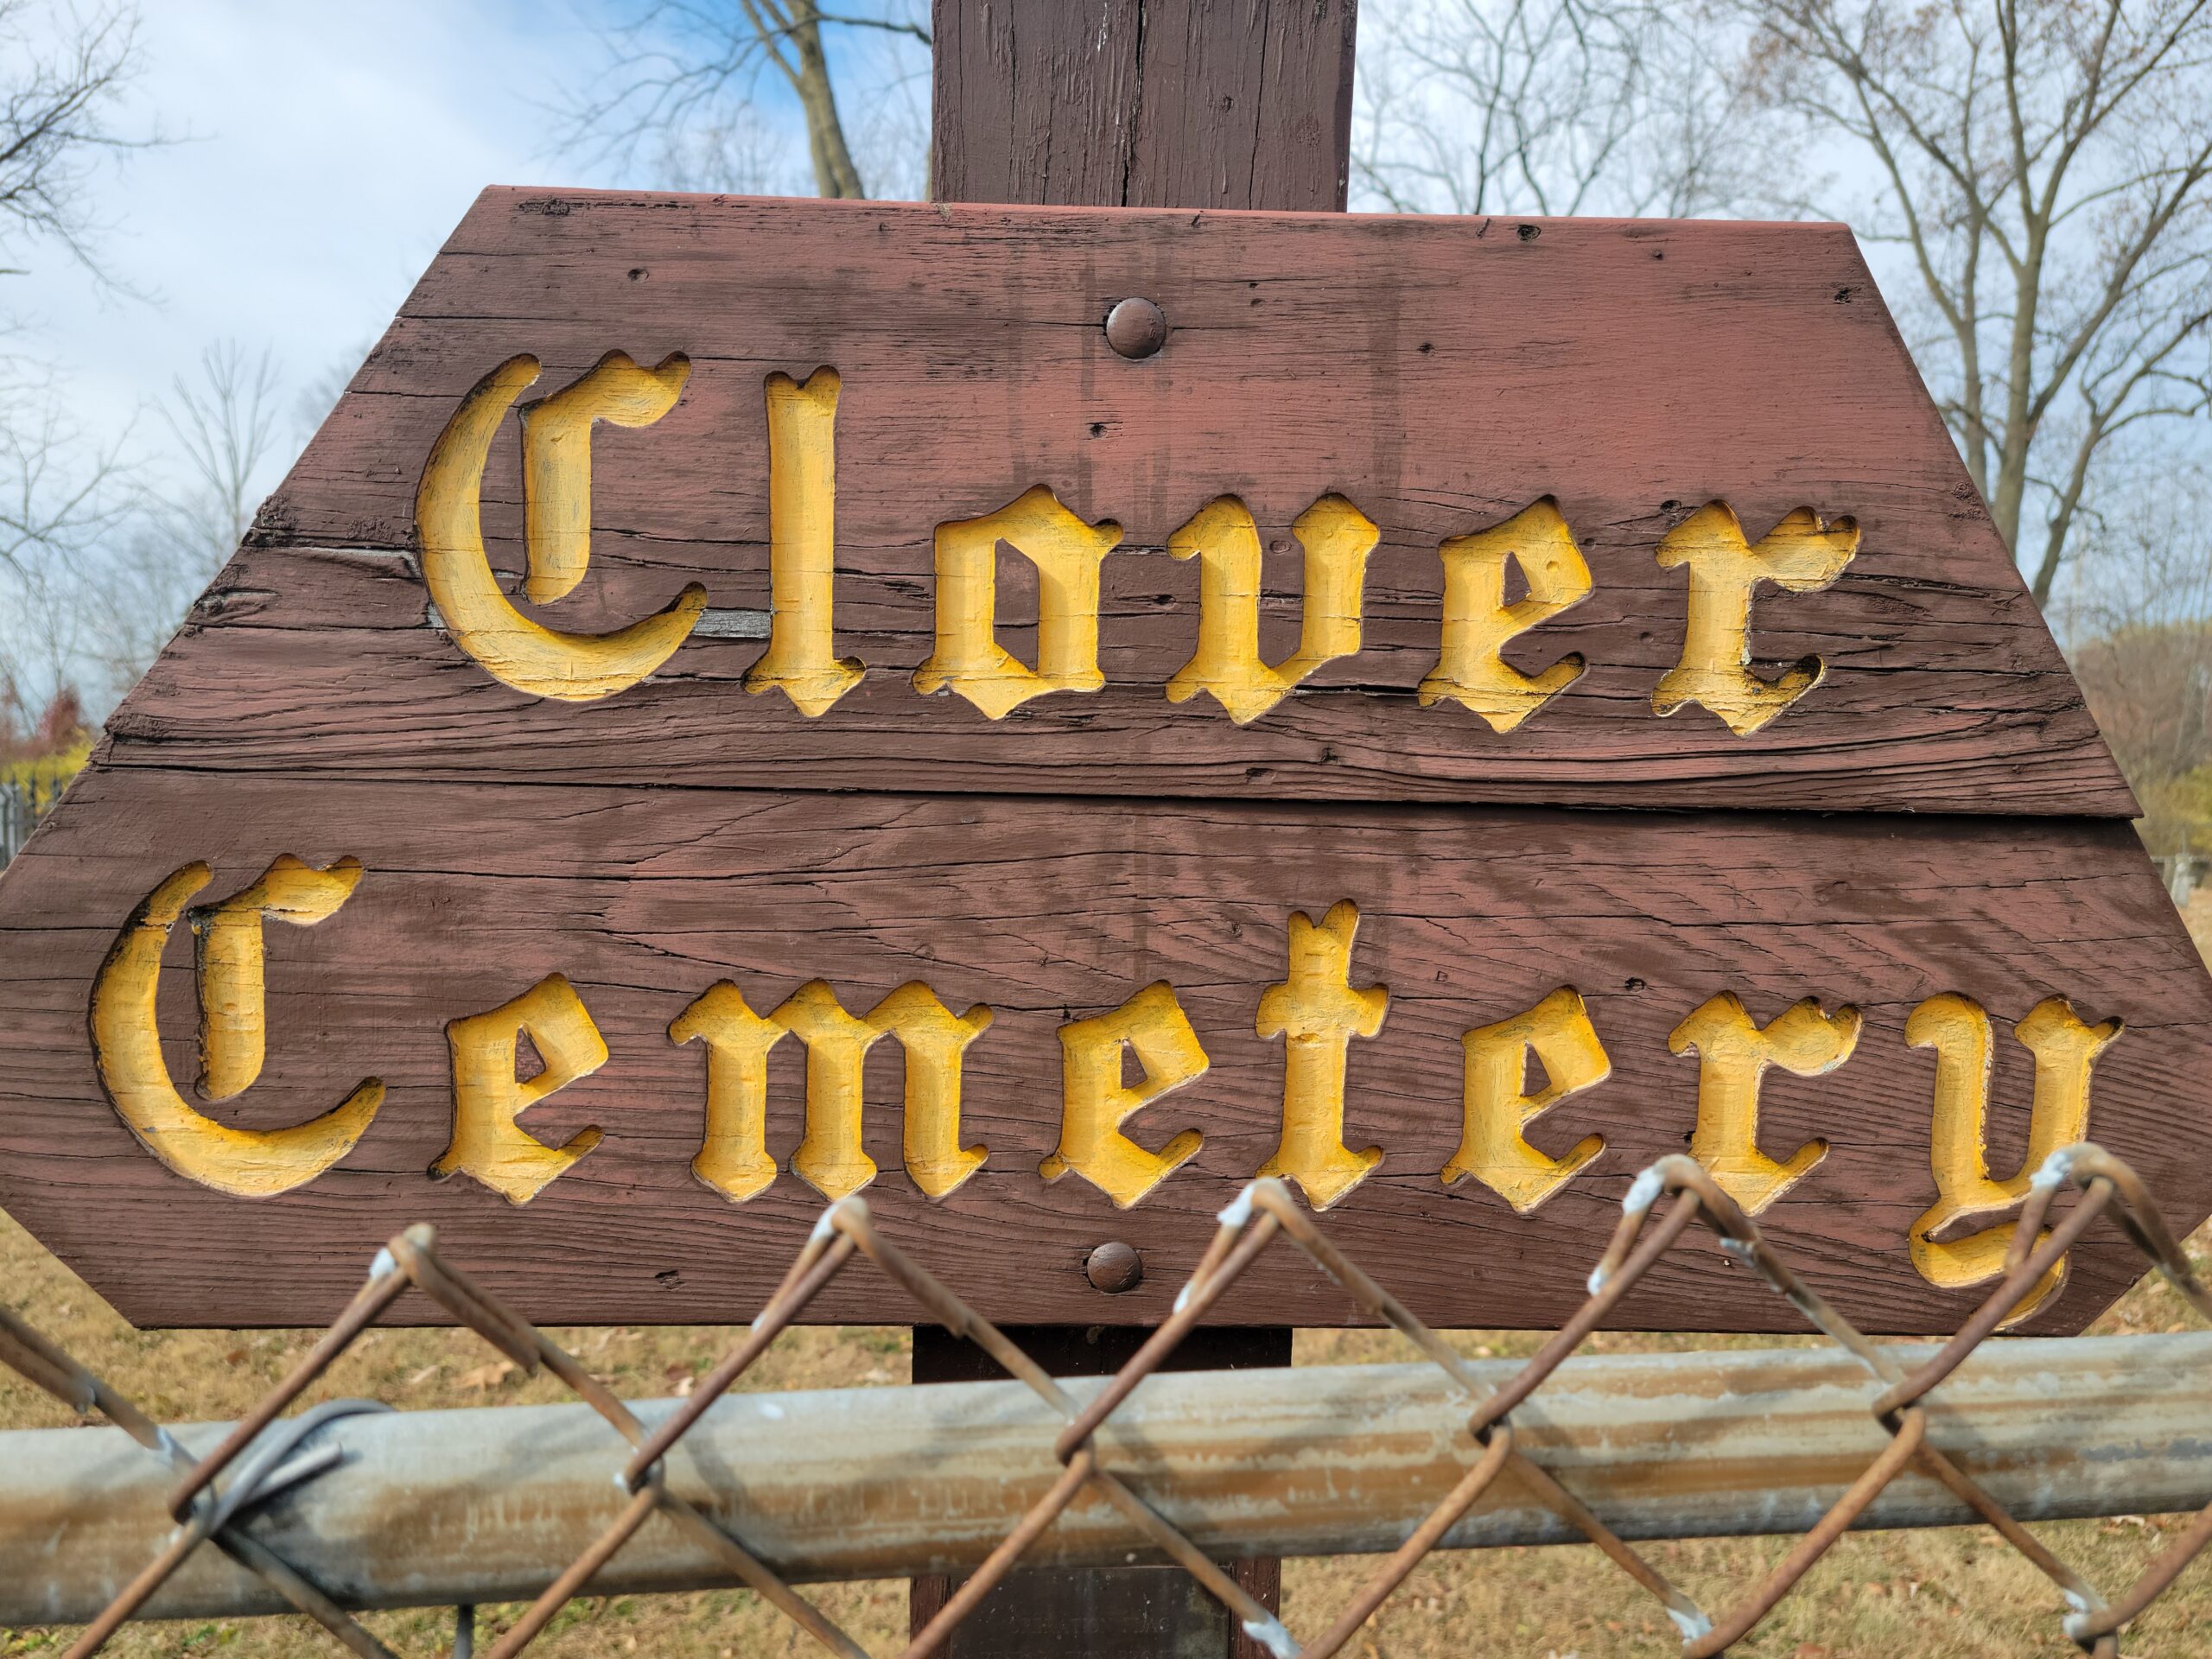 Clover Cemetery, Prairie Township, Franklin County, Ohio